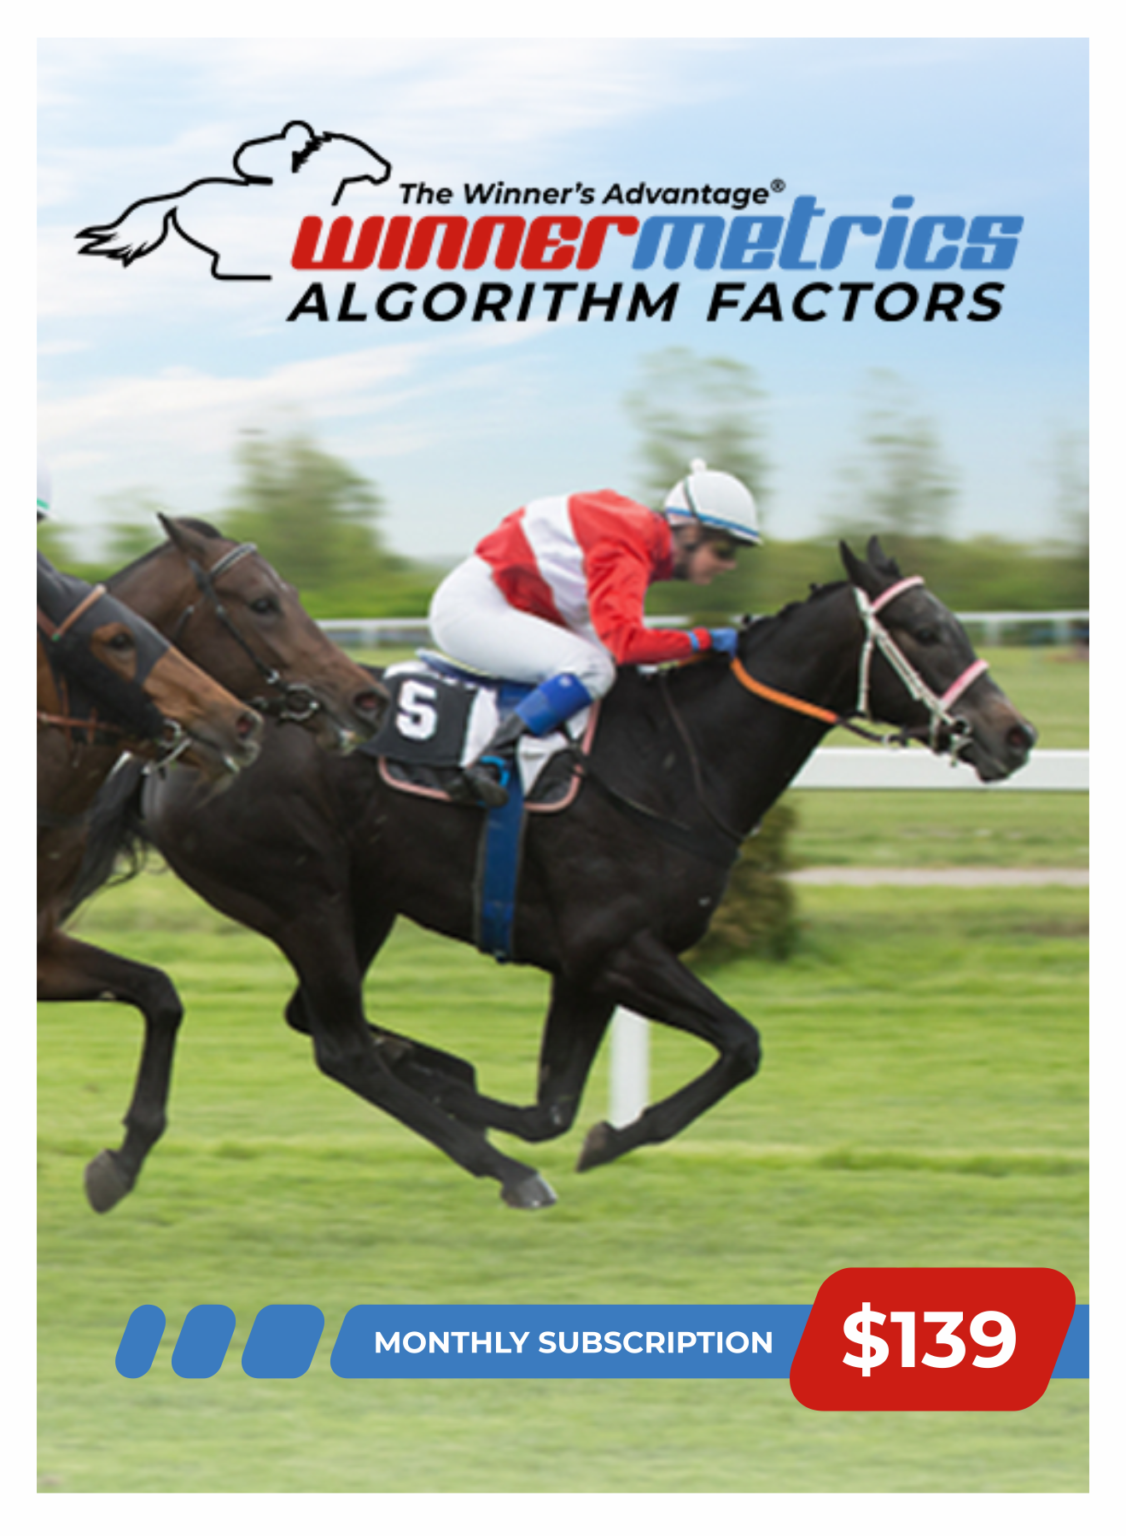 fanduel sportsbook and horse racing picks